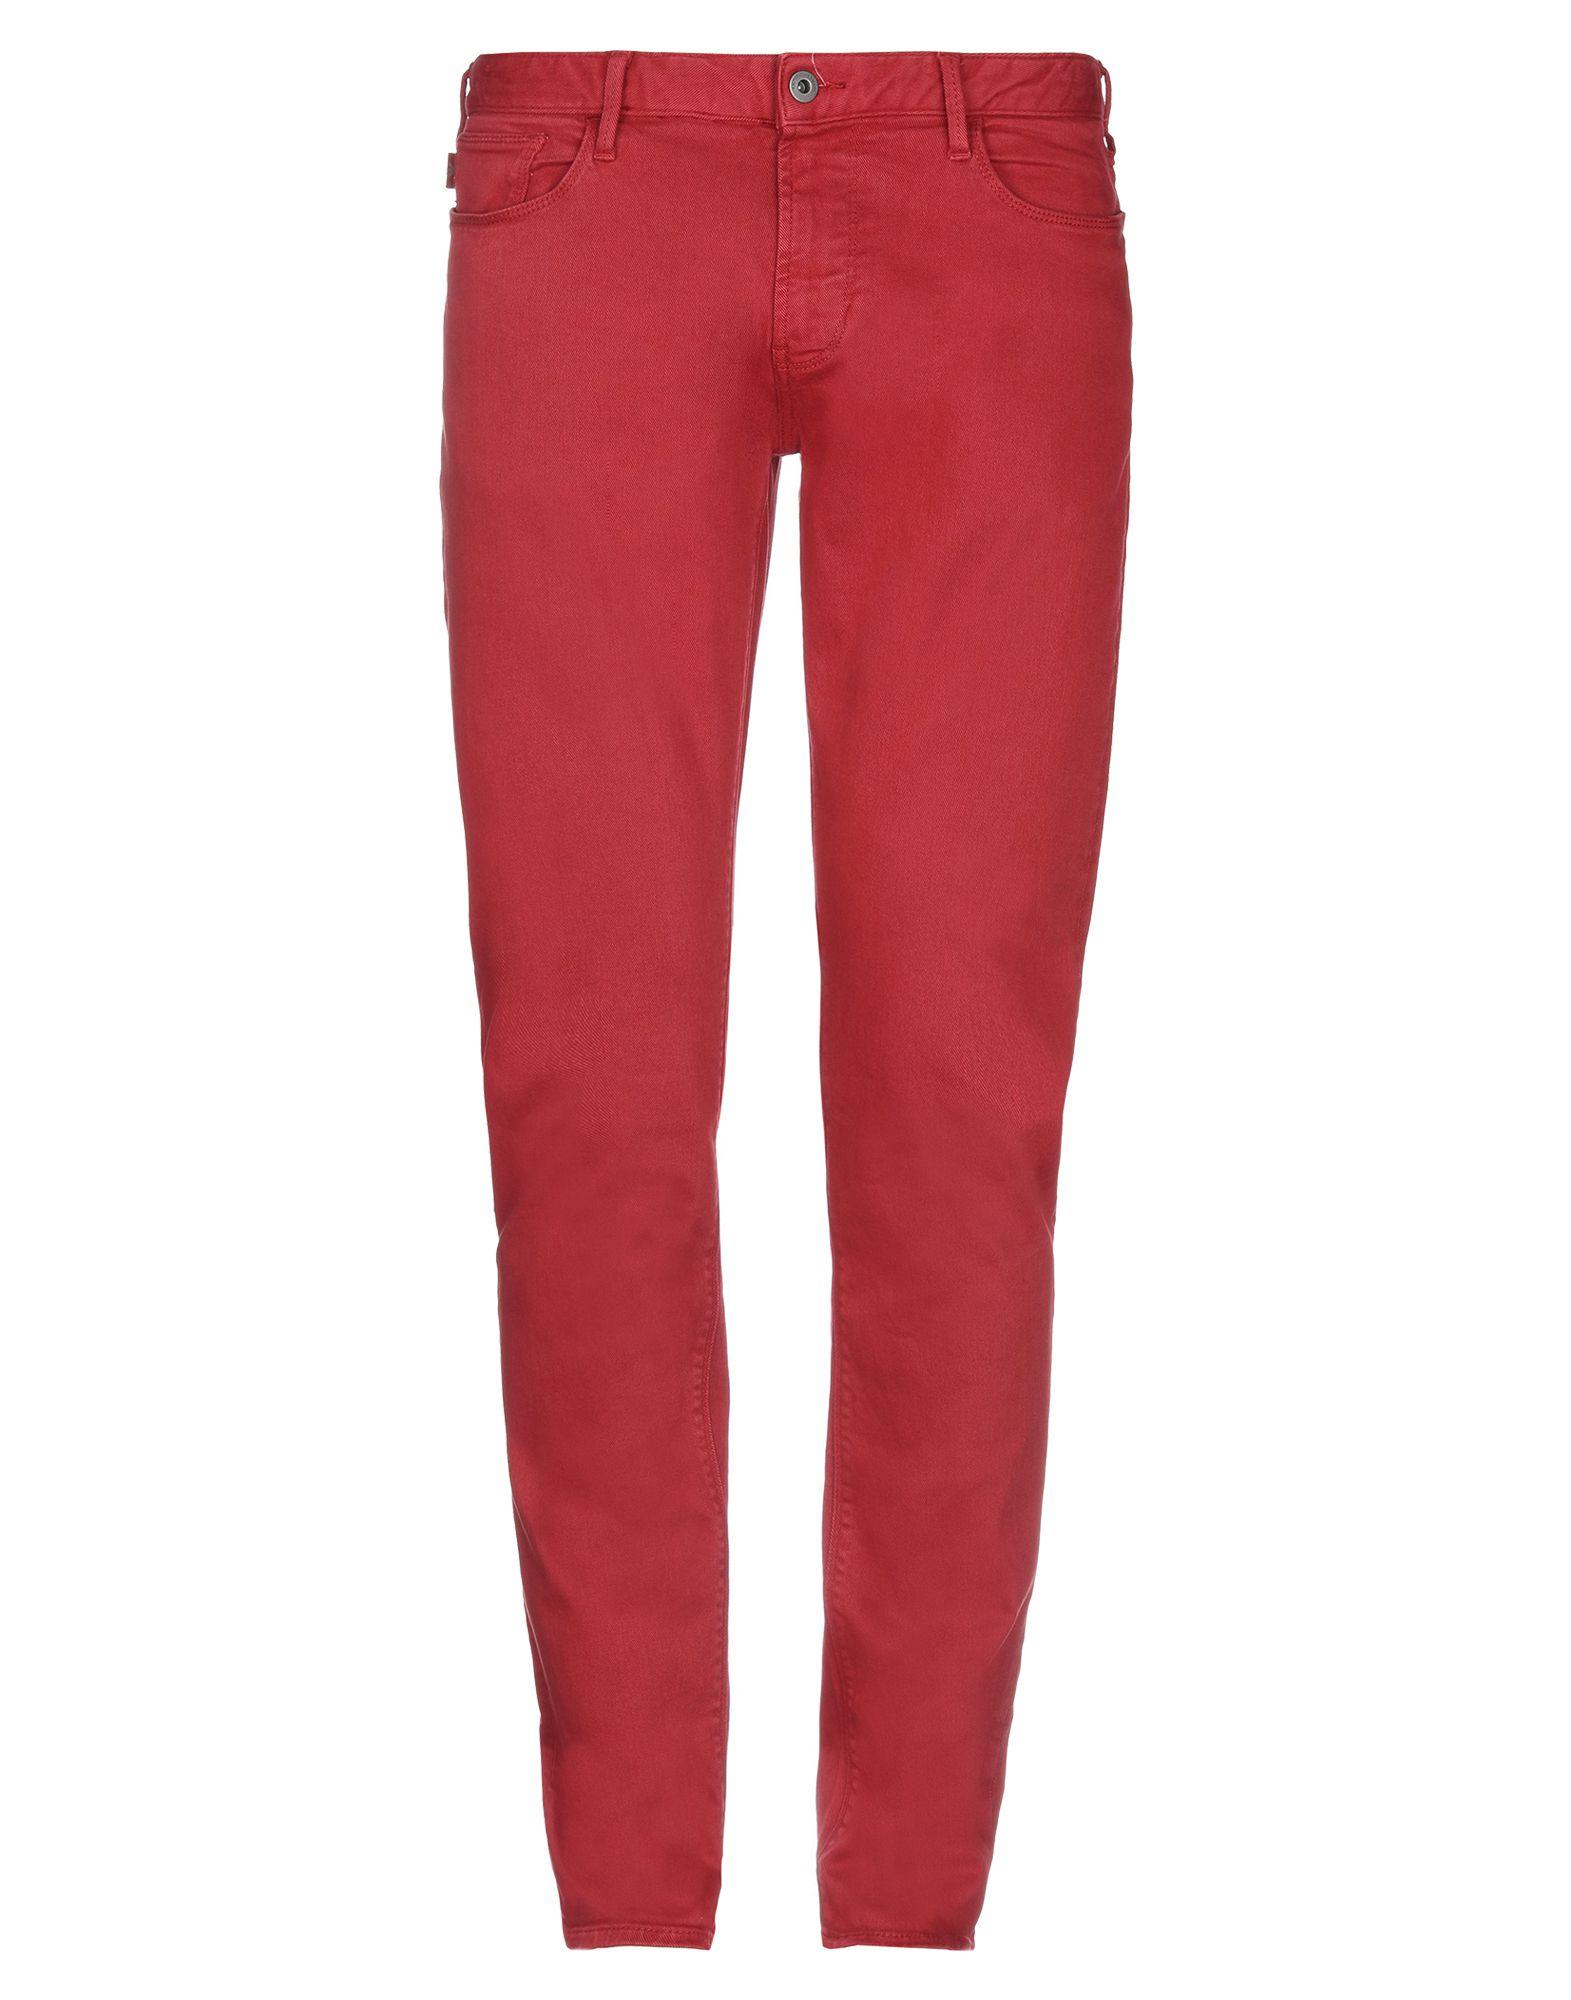 Emporio Armani Denim Trousers in Red for Men - Lyst